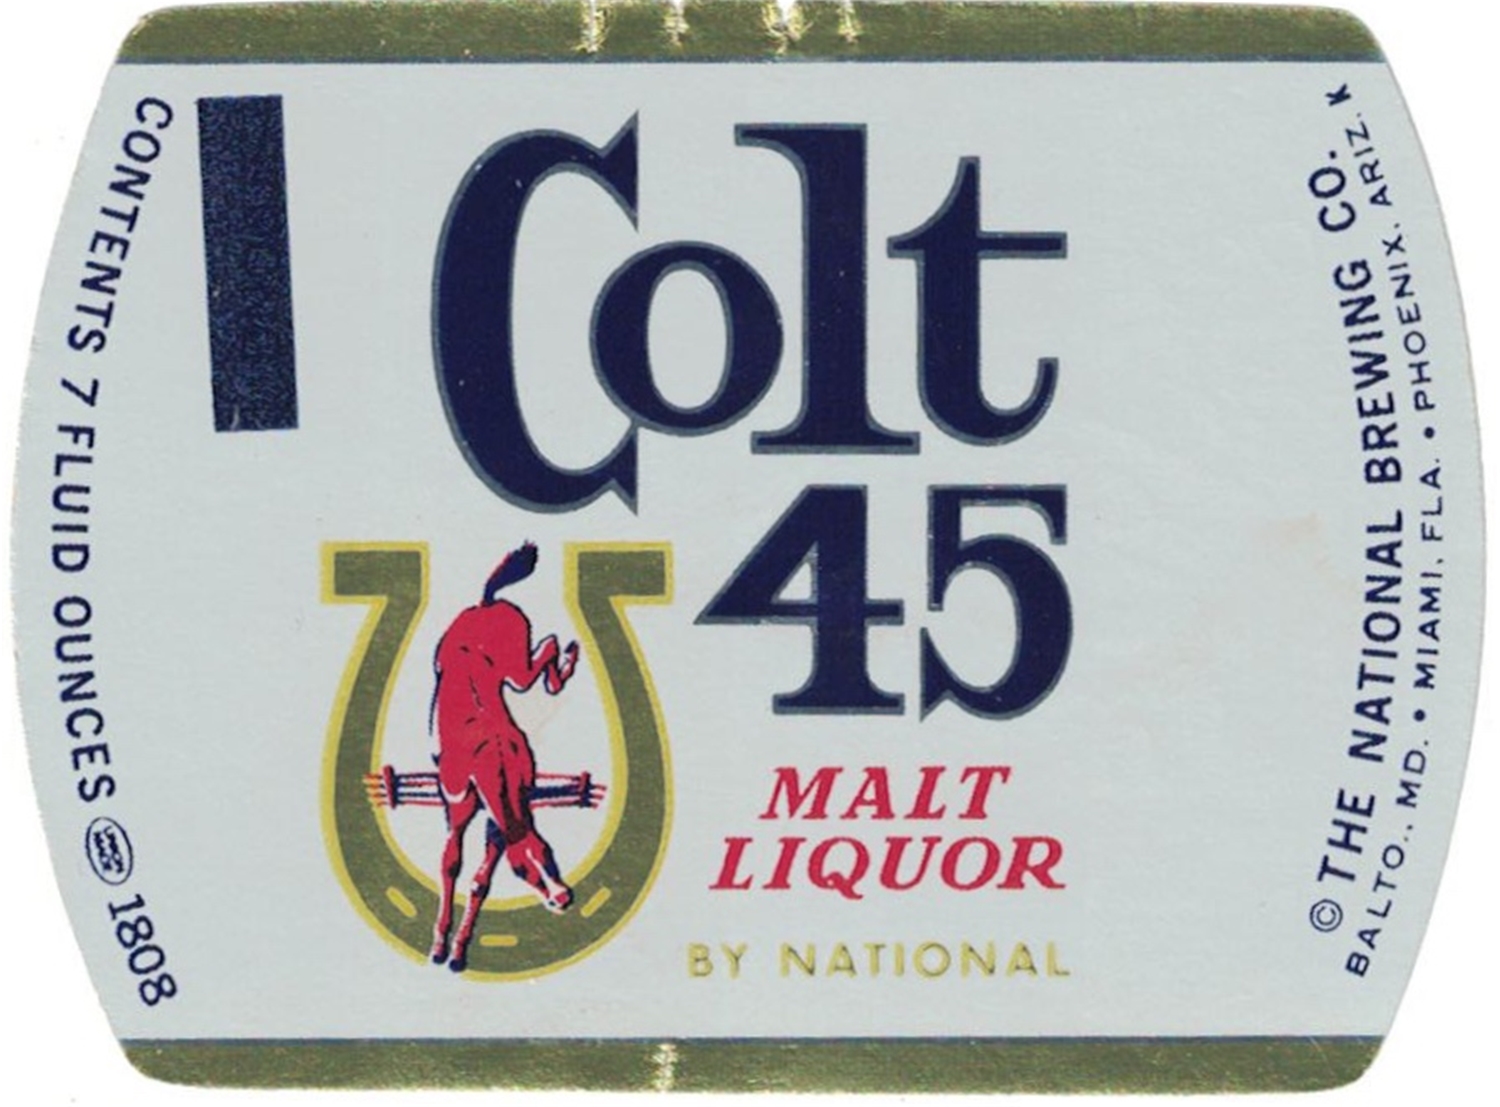 Colt 45 Malt Liquor 7 oz Label  by National